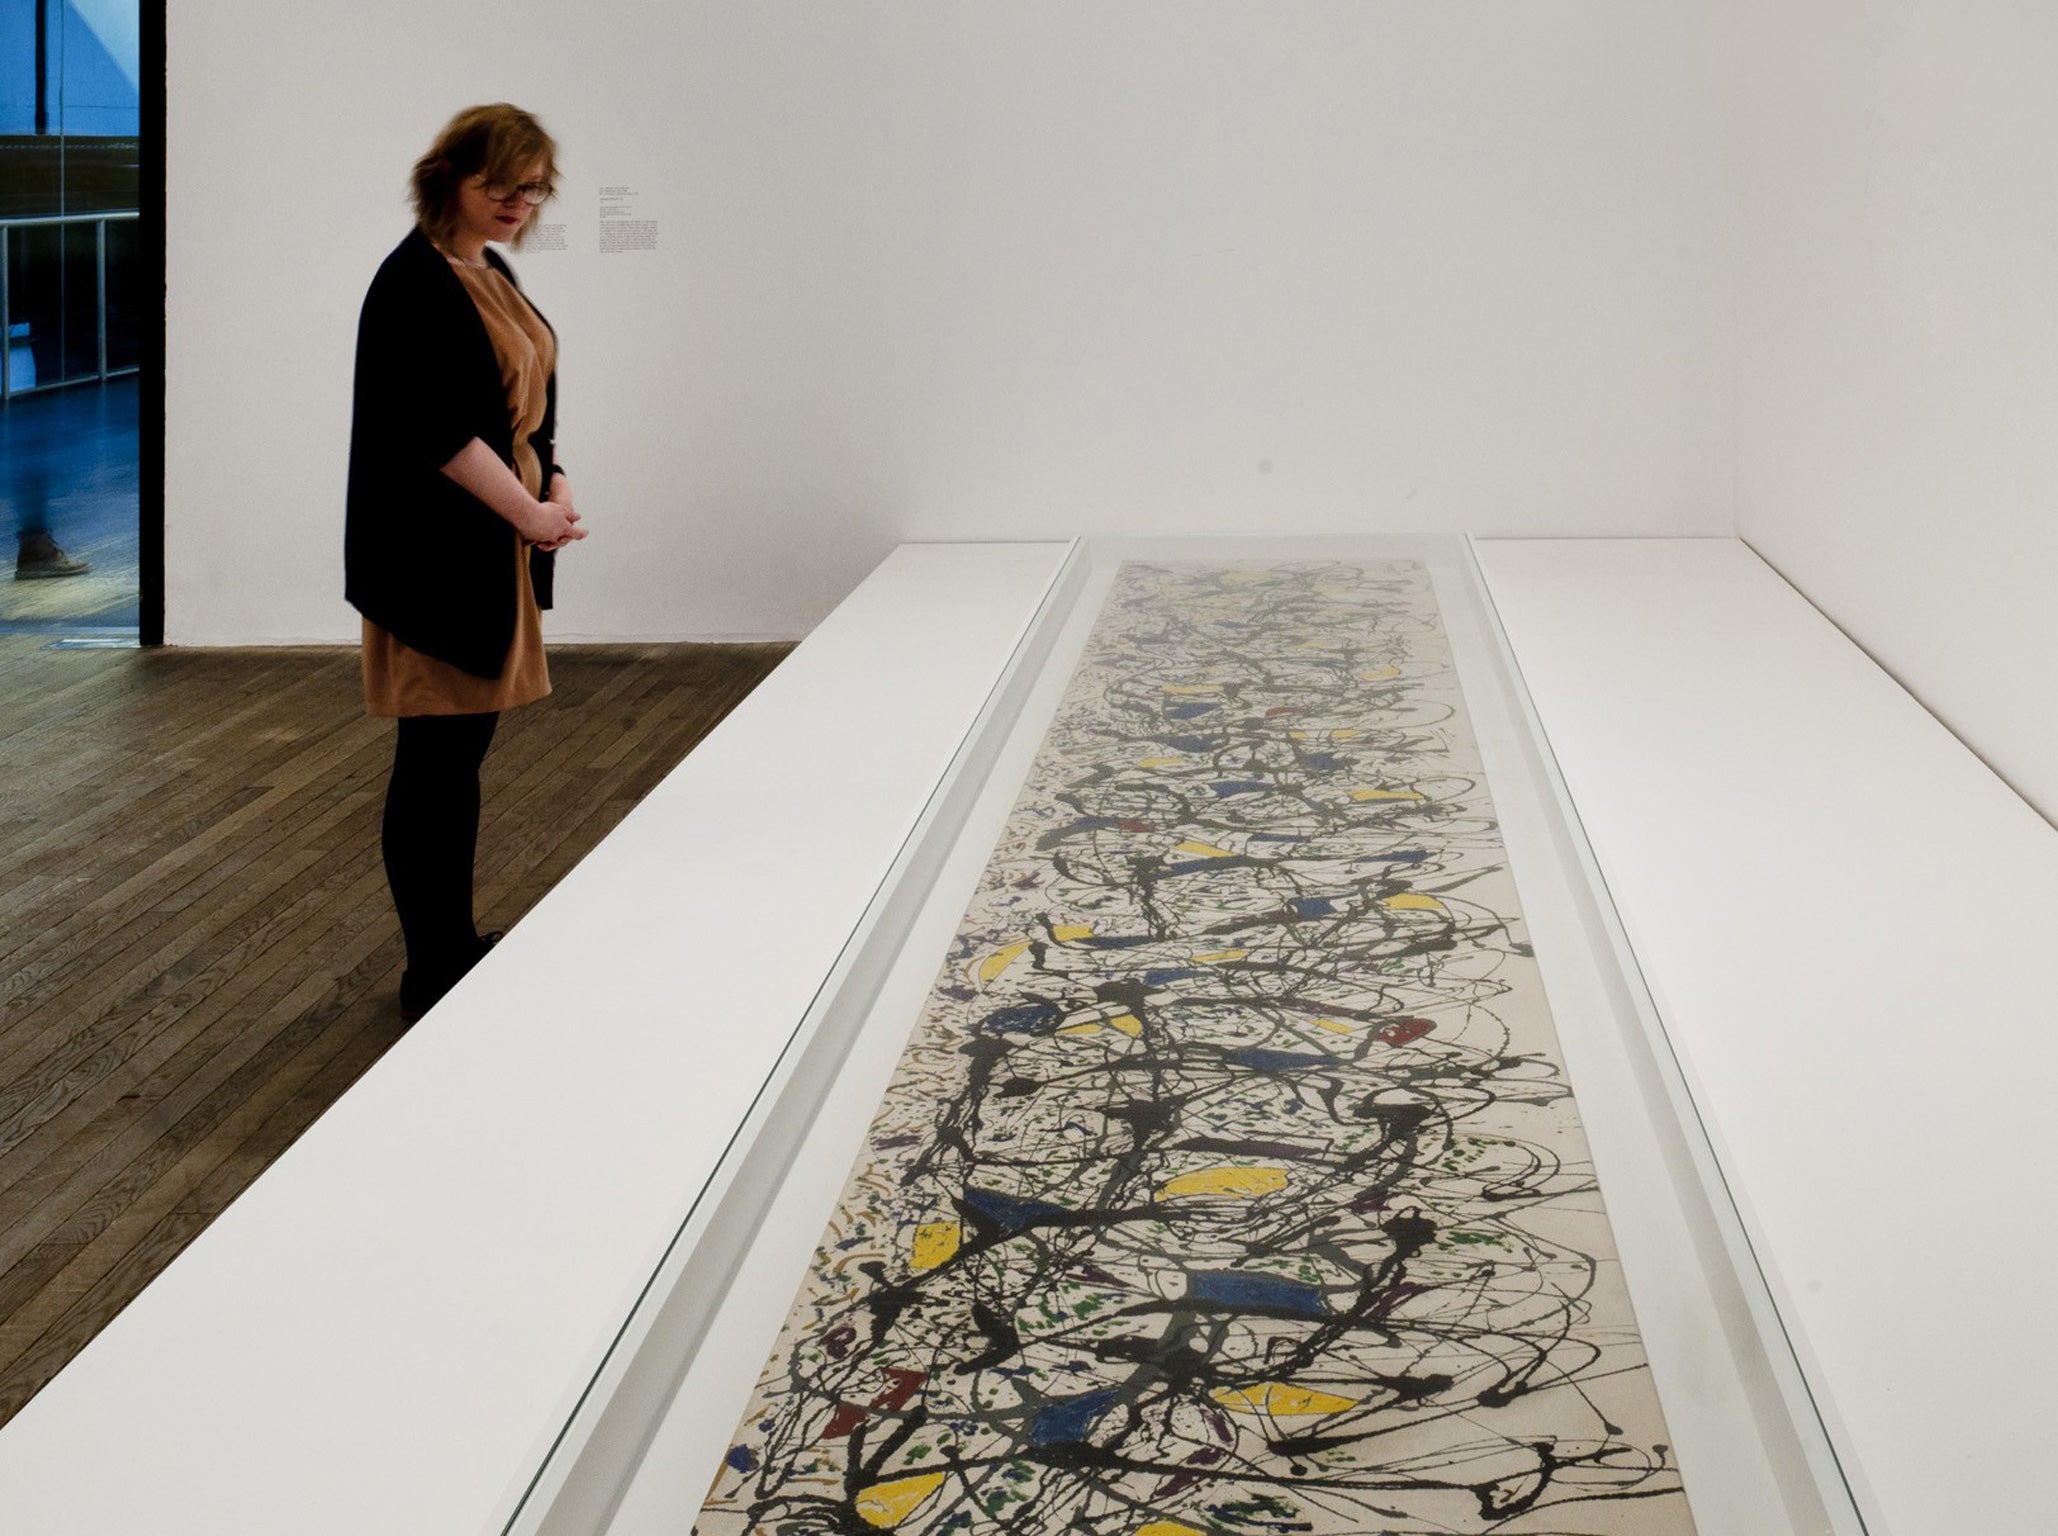 Jackson Pollock’s Summertime, at A Bigger Splash in the Tate Modern